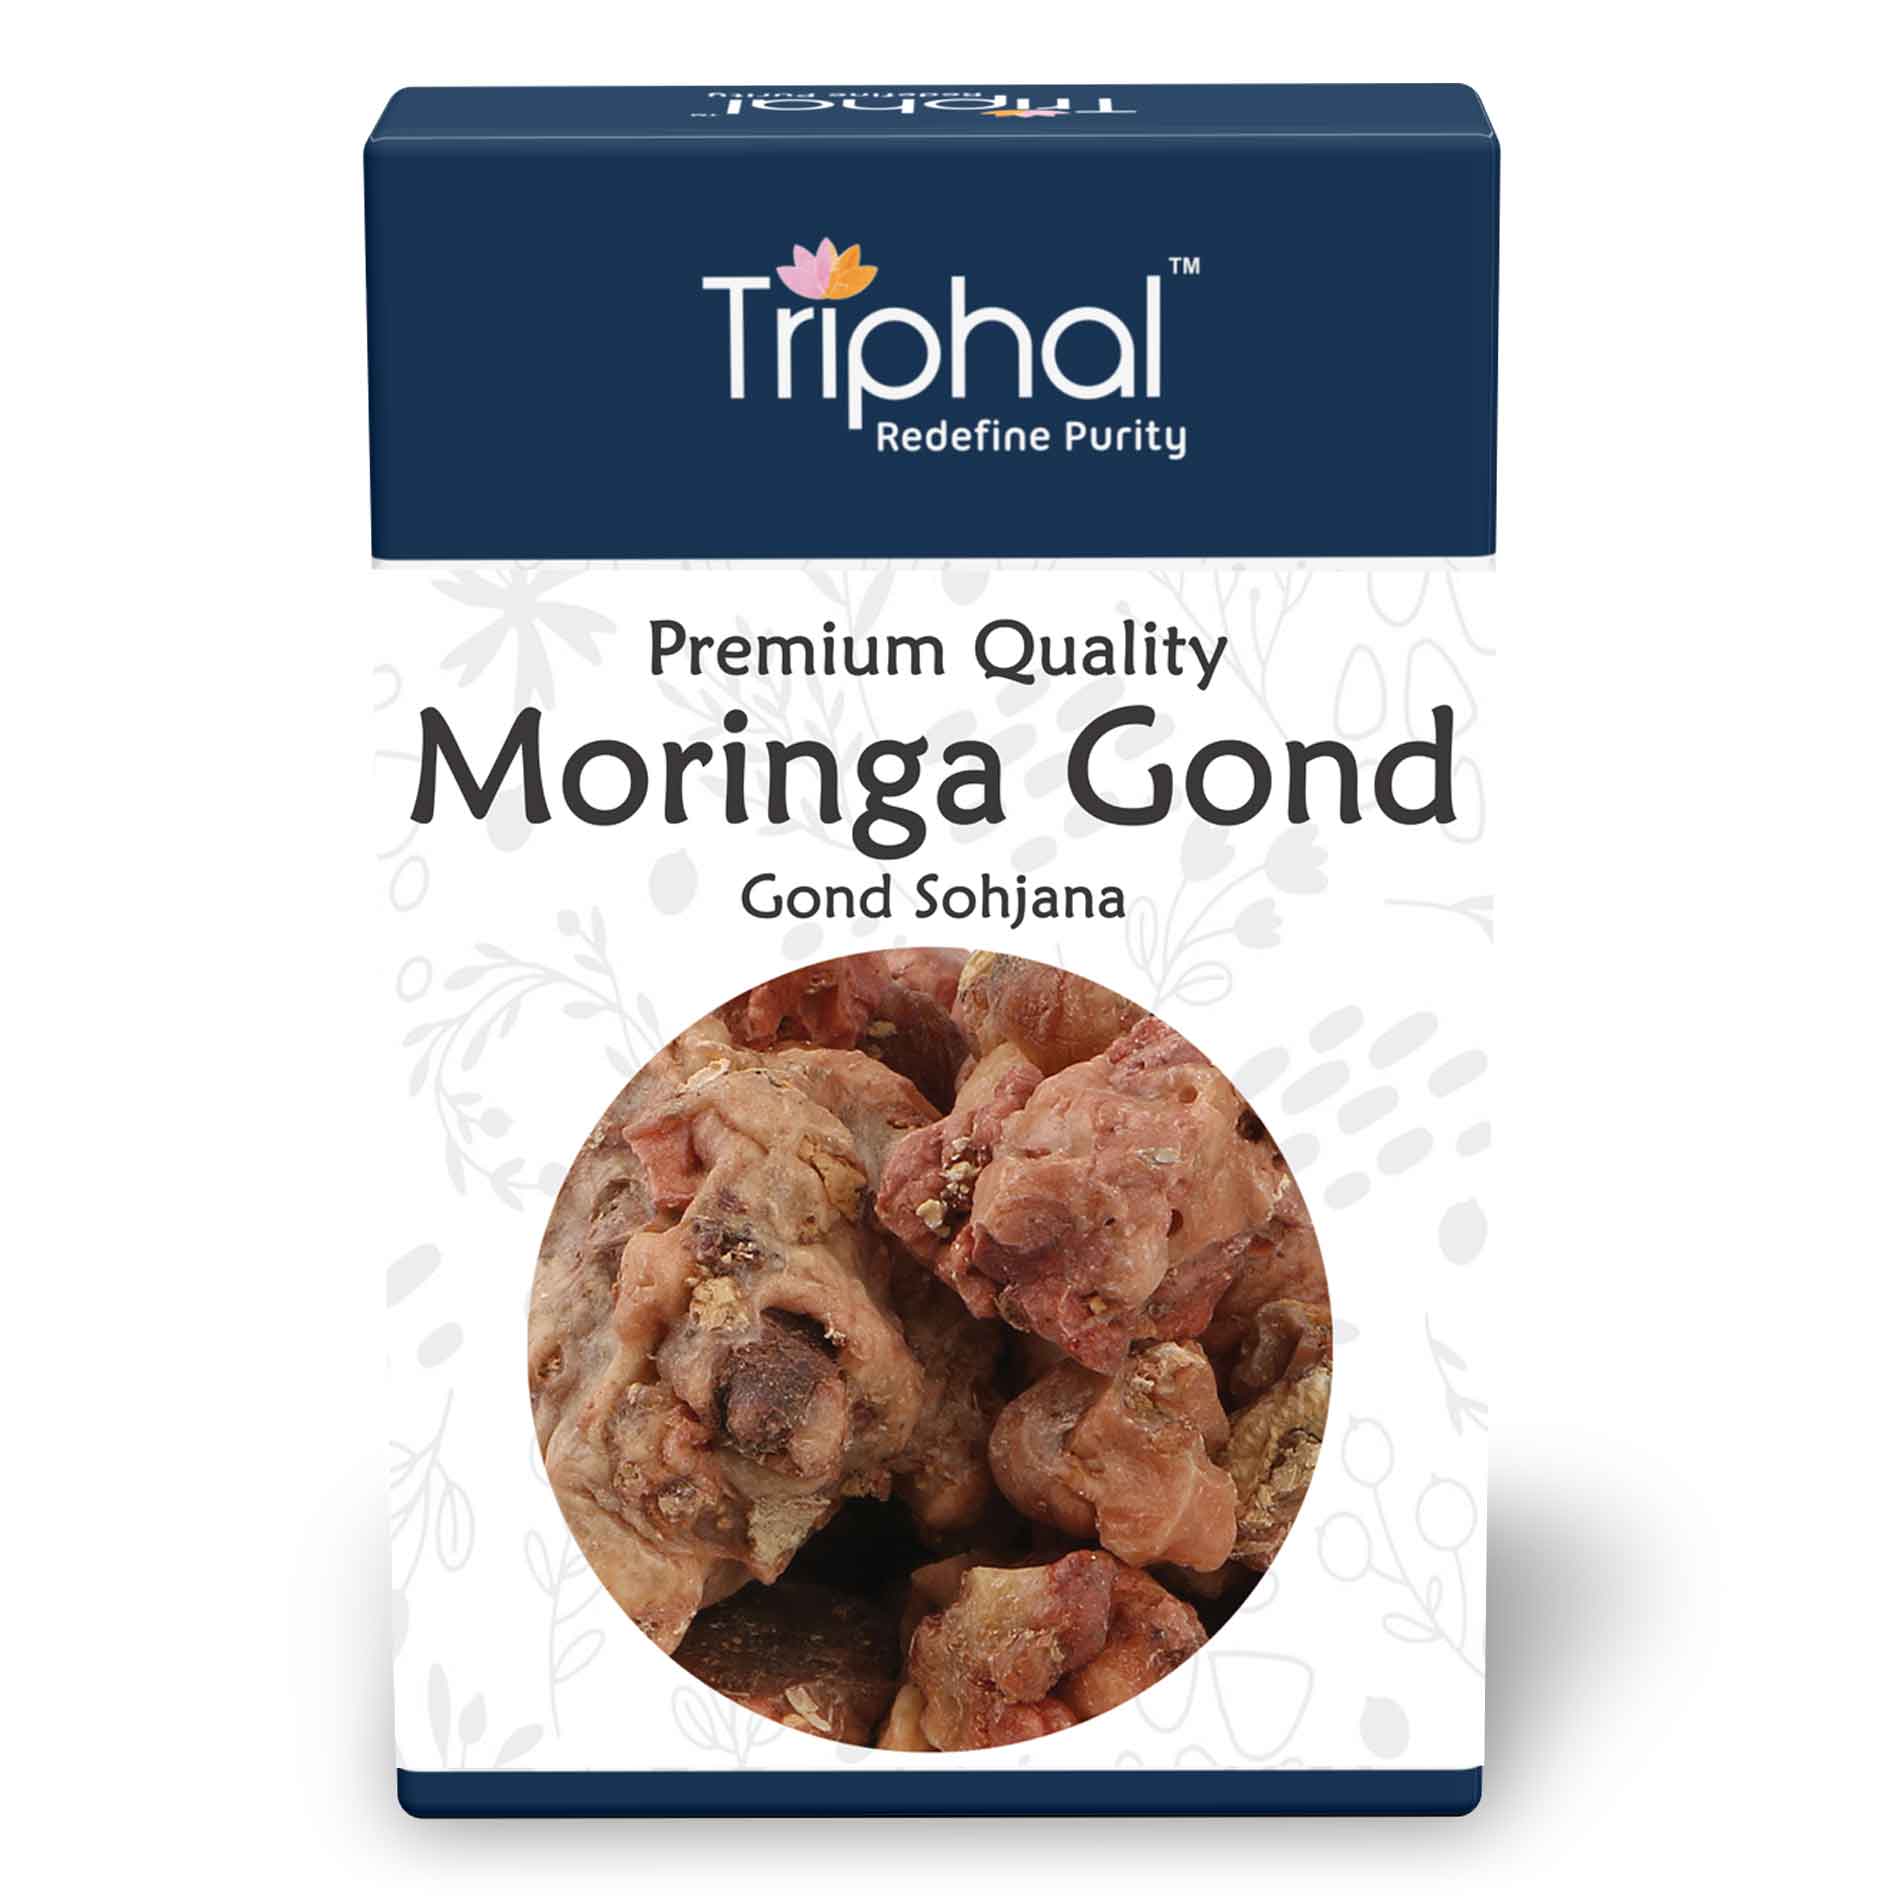 Moringa Gum Gond Sohjana or Moringa Gond - Original and pure by TRIPHAL, a brand serving original and pure herbal products or jadibooti